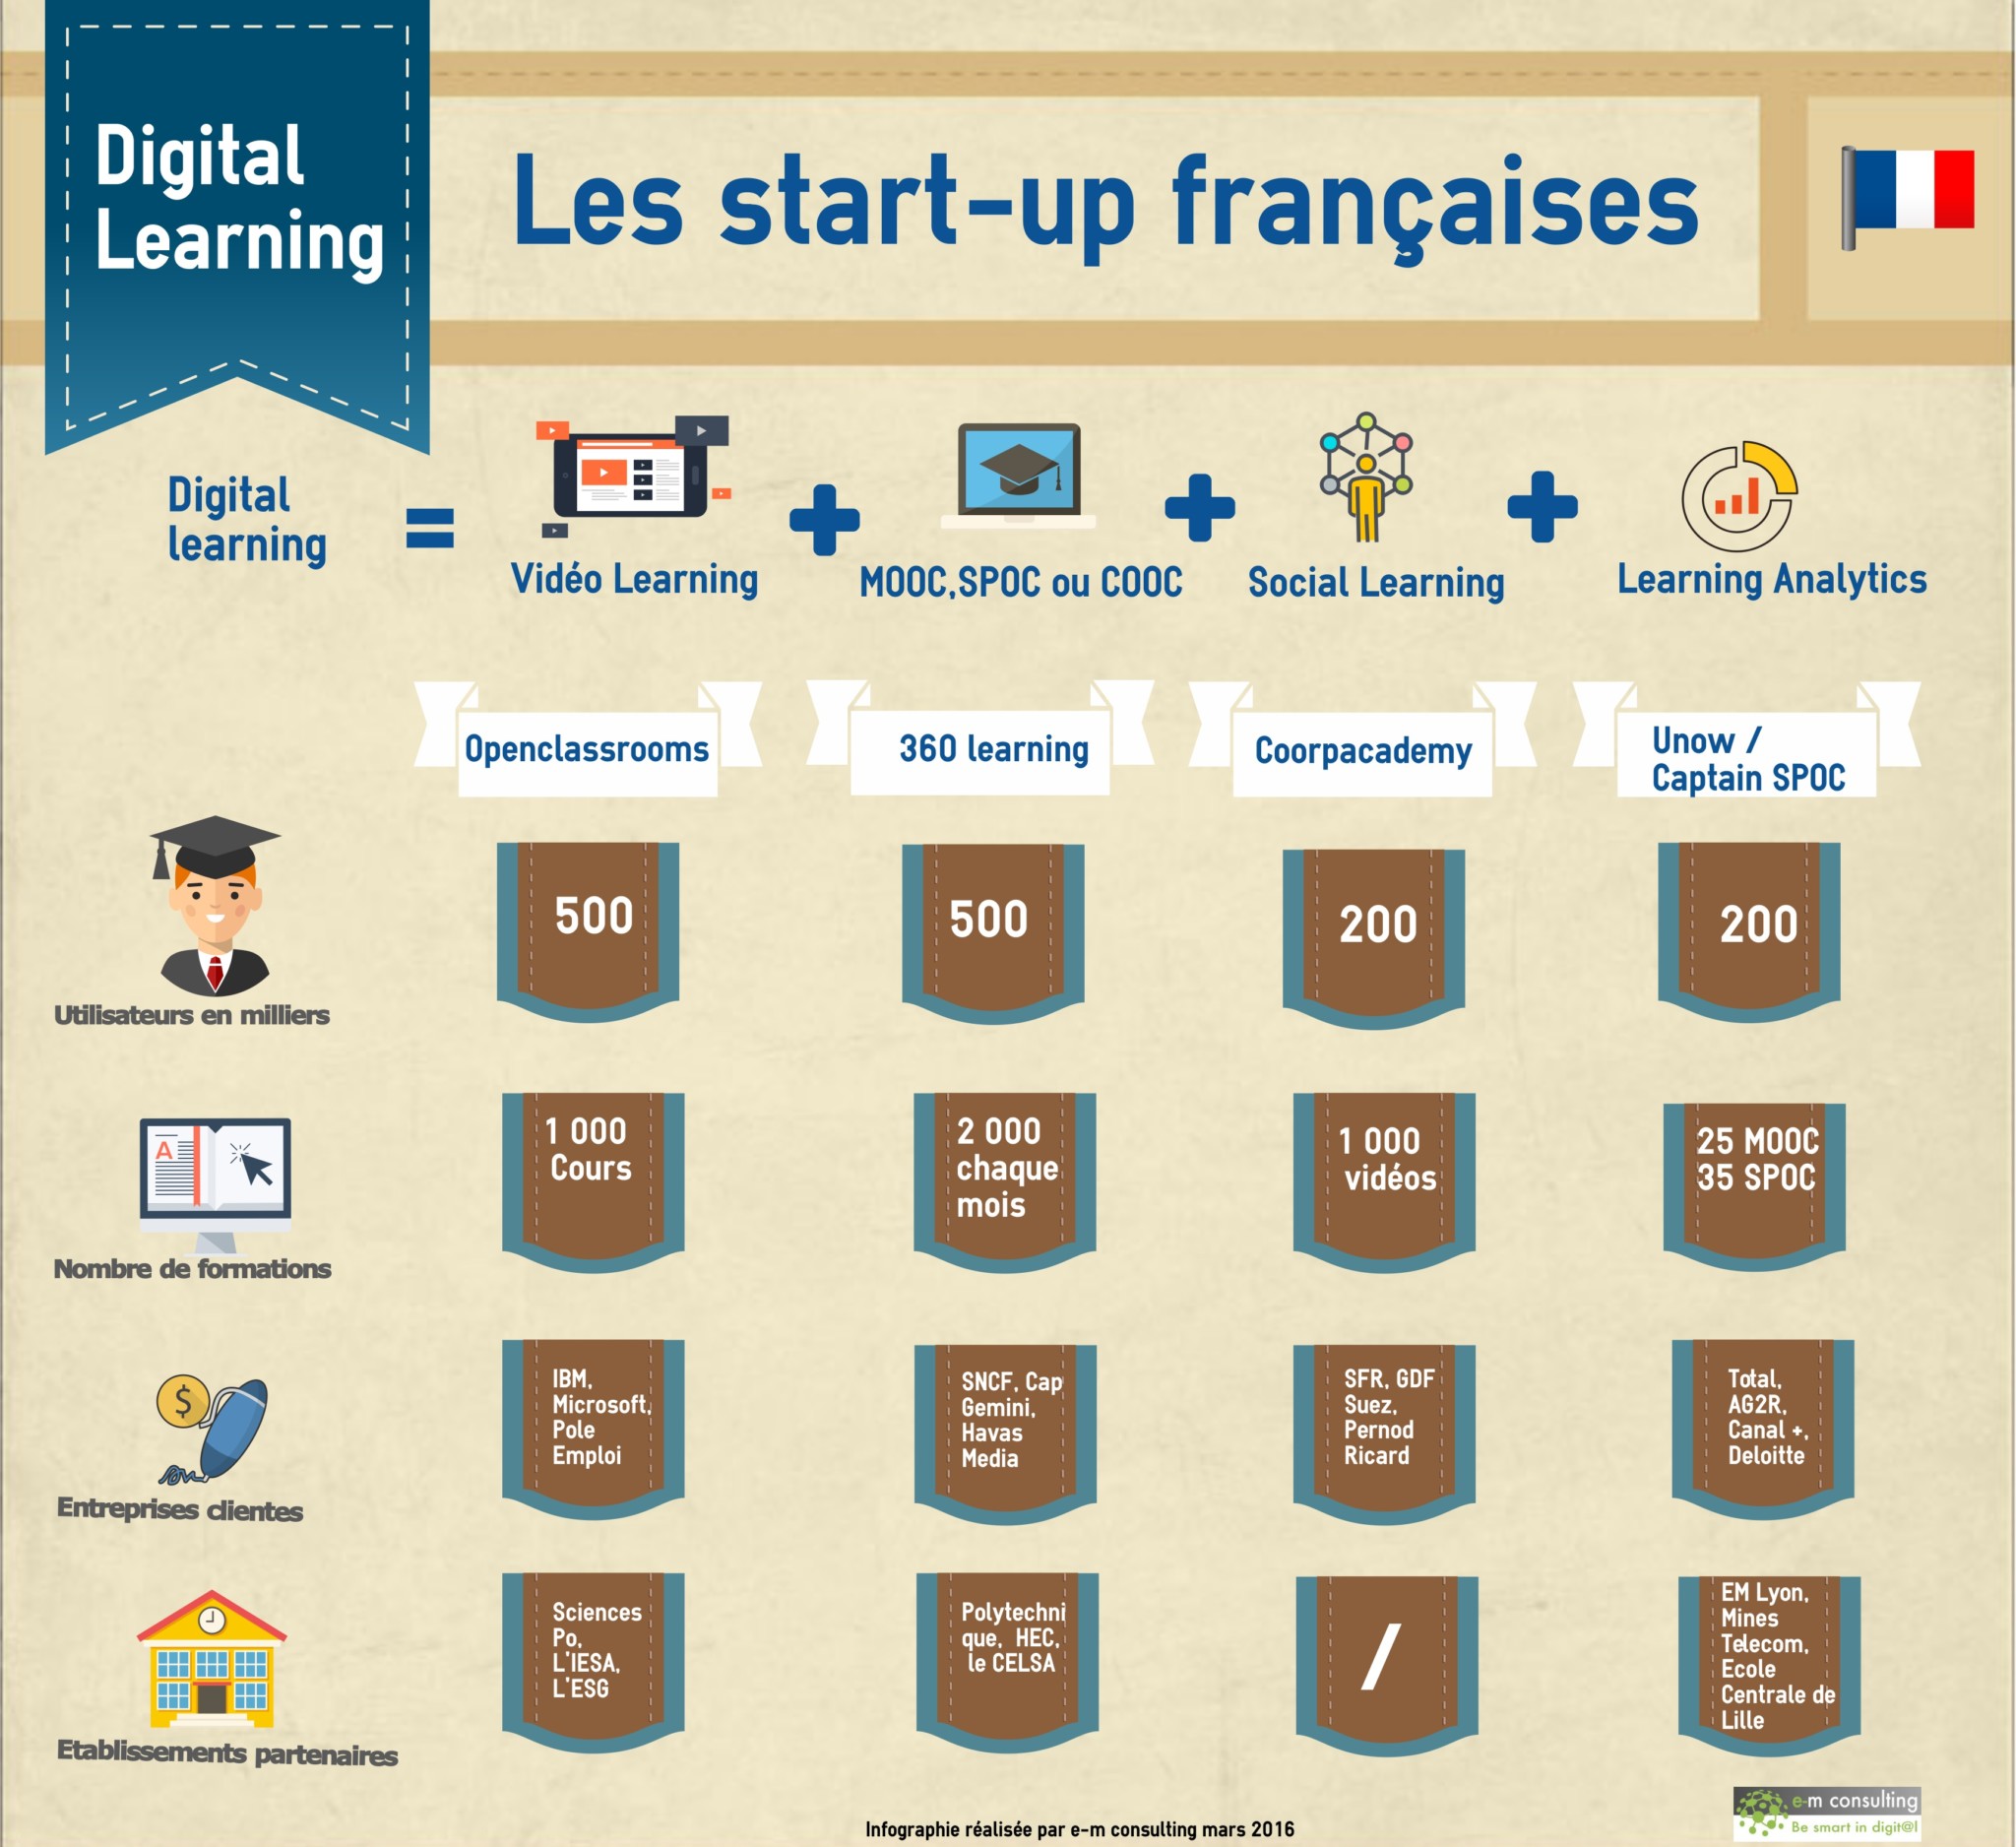 les-start-up-francaises-du-digital-learning-e-m-consulting